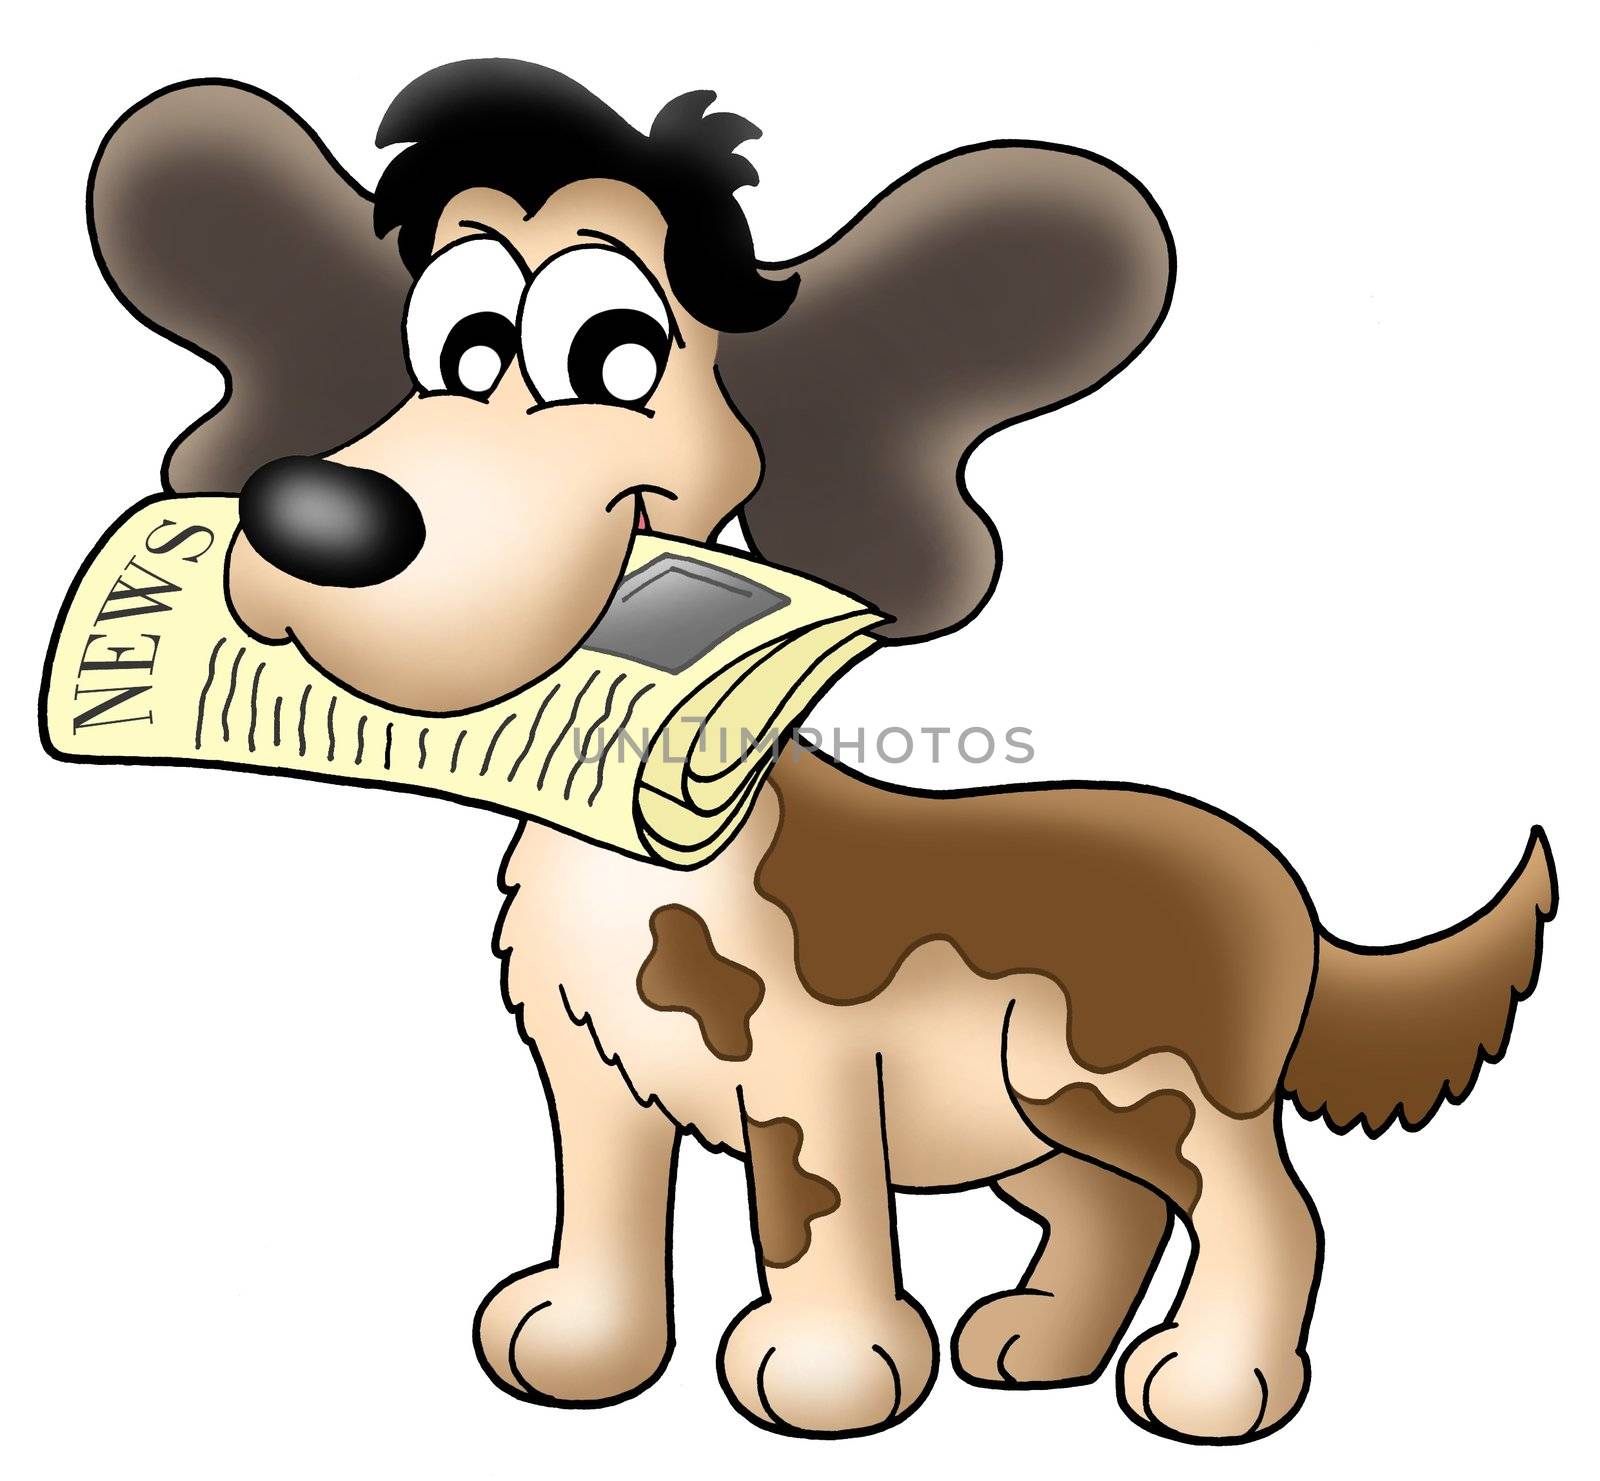 Color illustration of dog with newspaper.